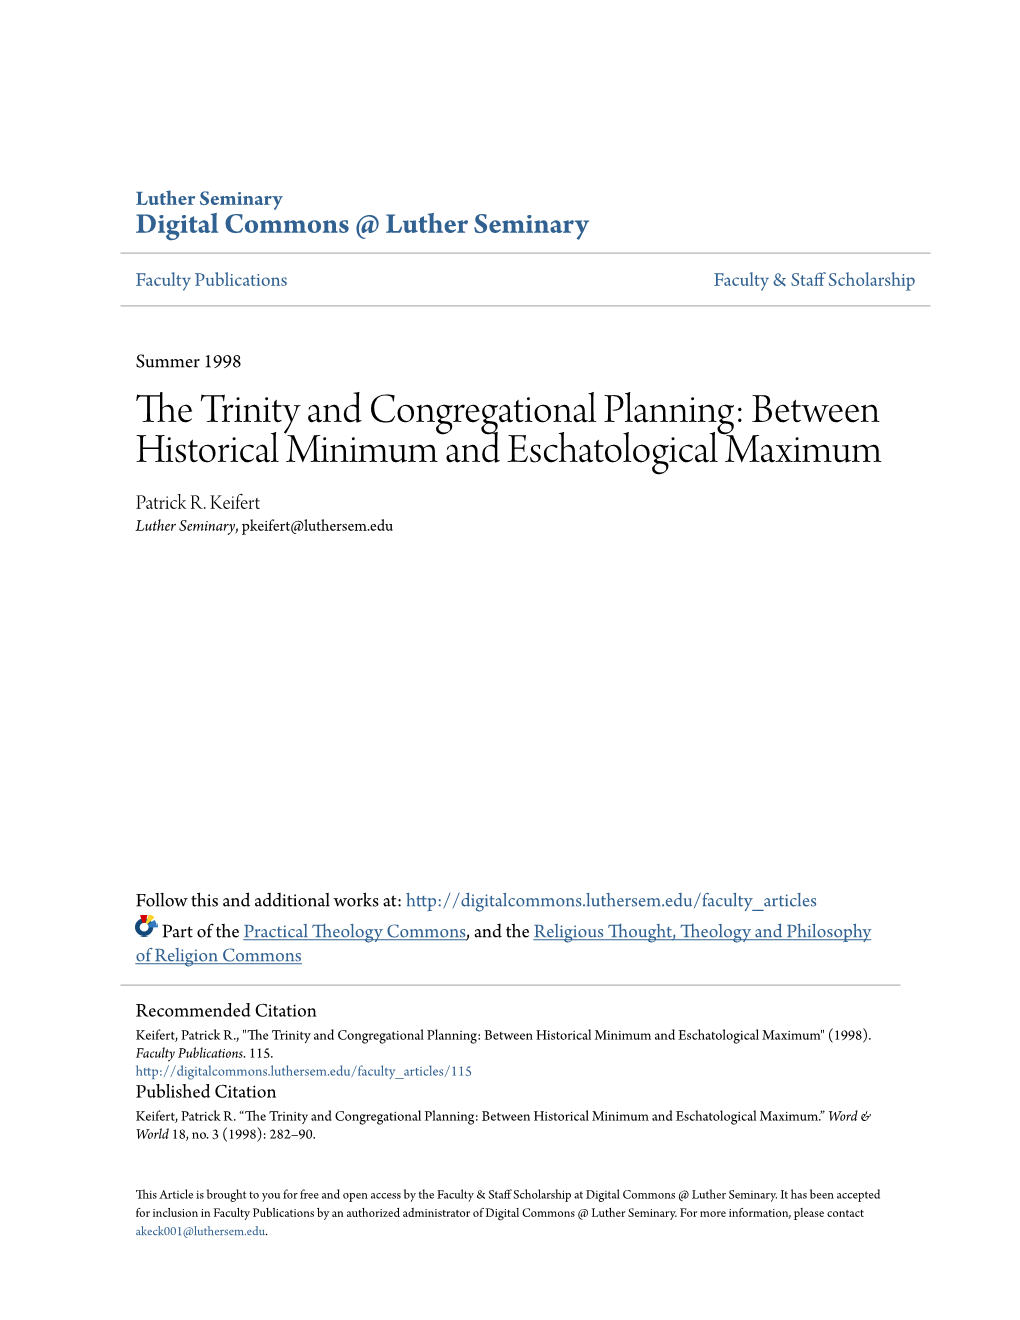 The Trinity and Congregational Planning: Between Historical Minimum and Eschatological Maximum PATRICK KEIFERT